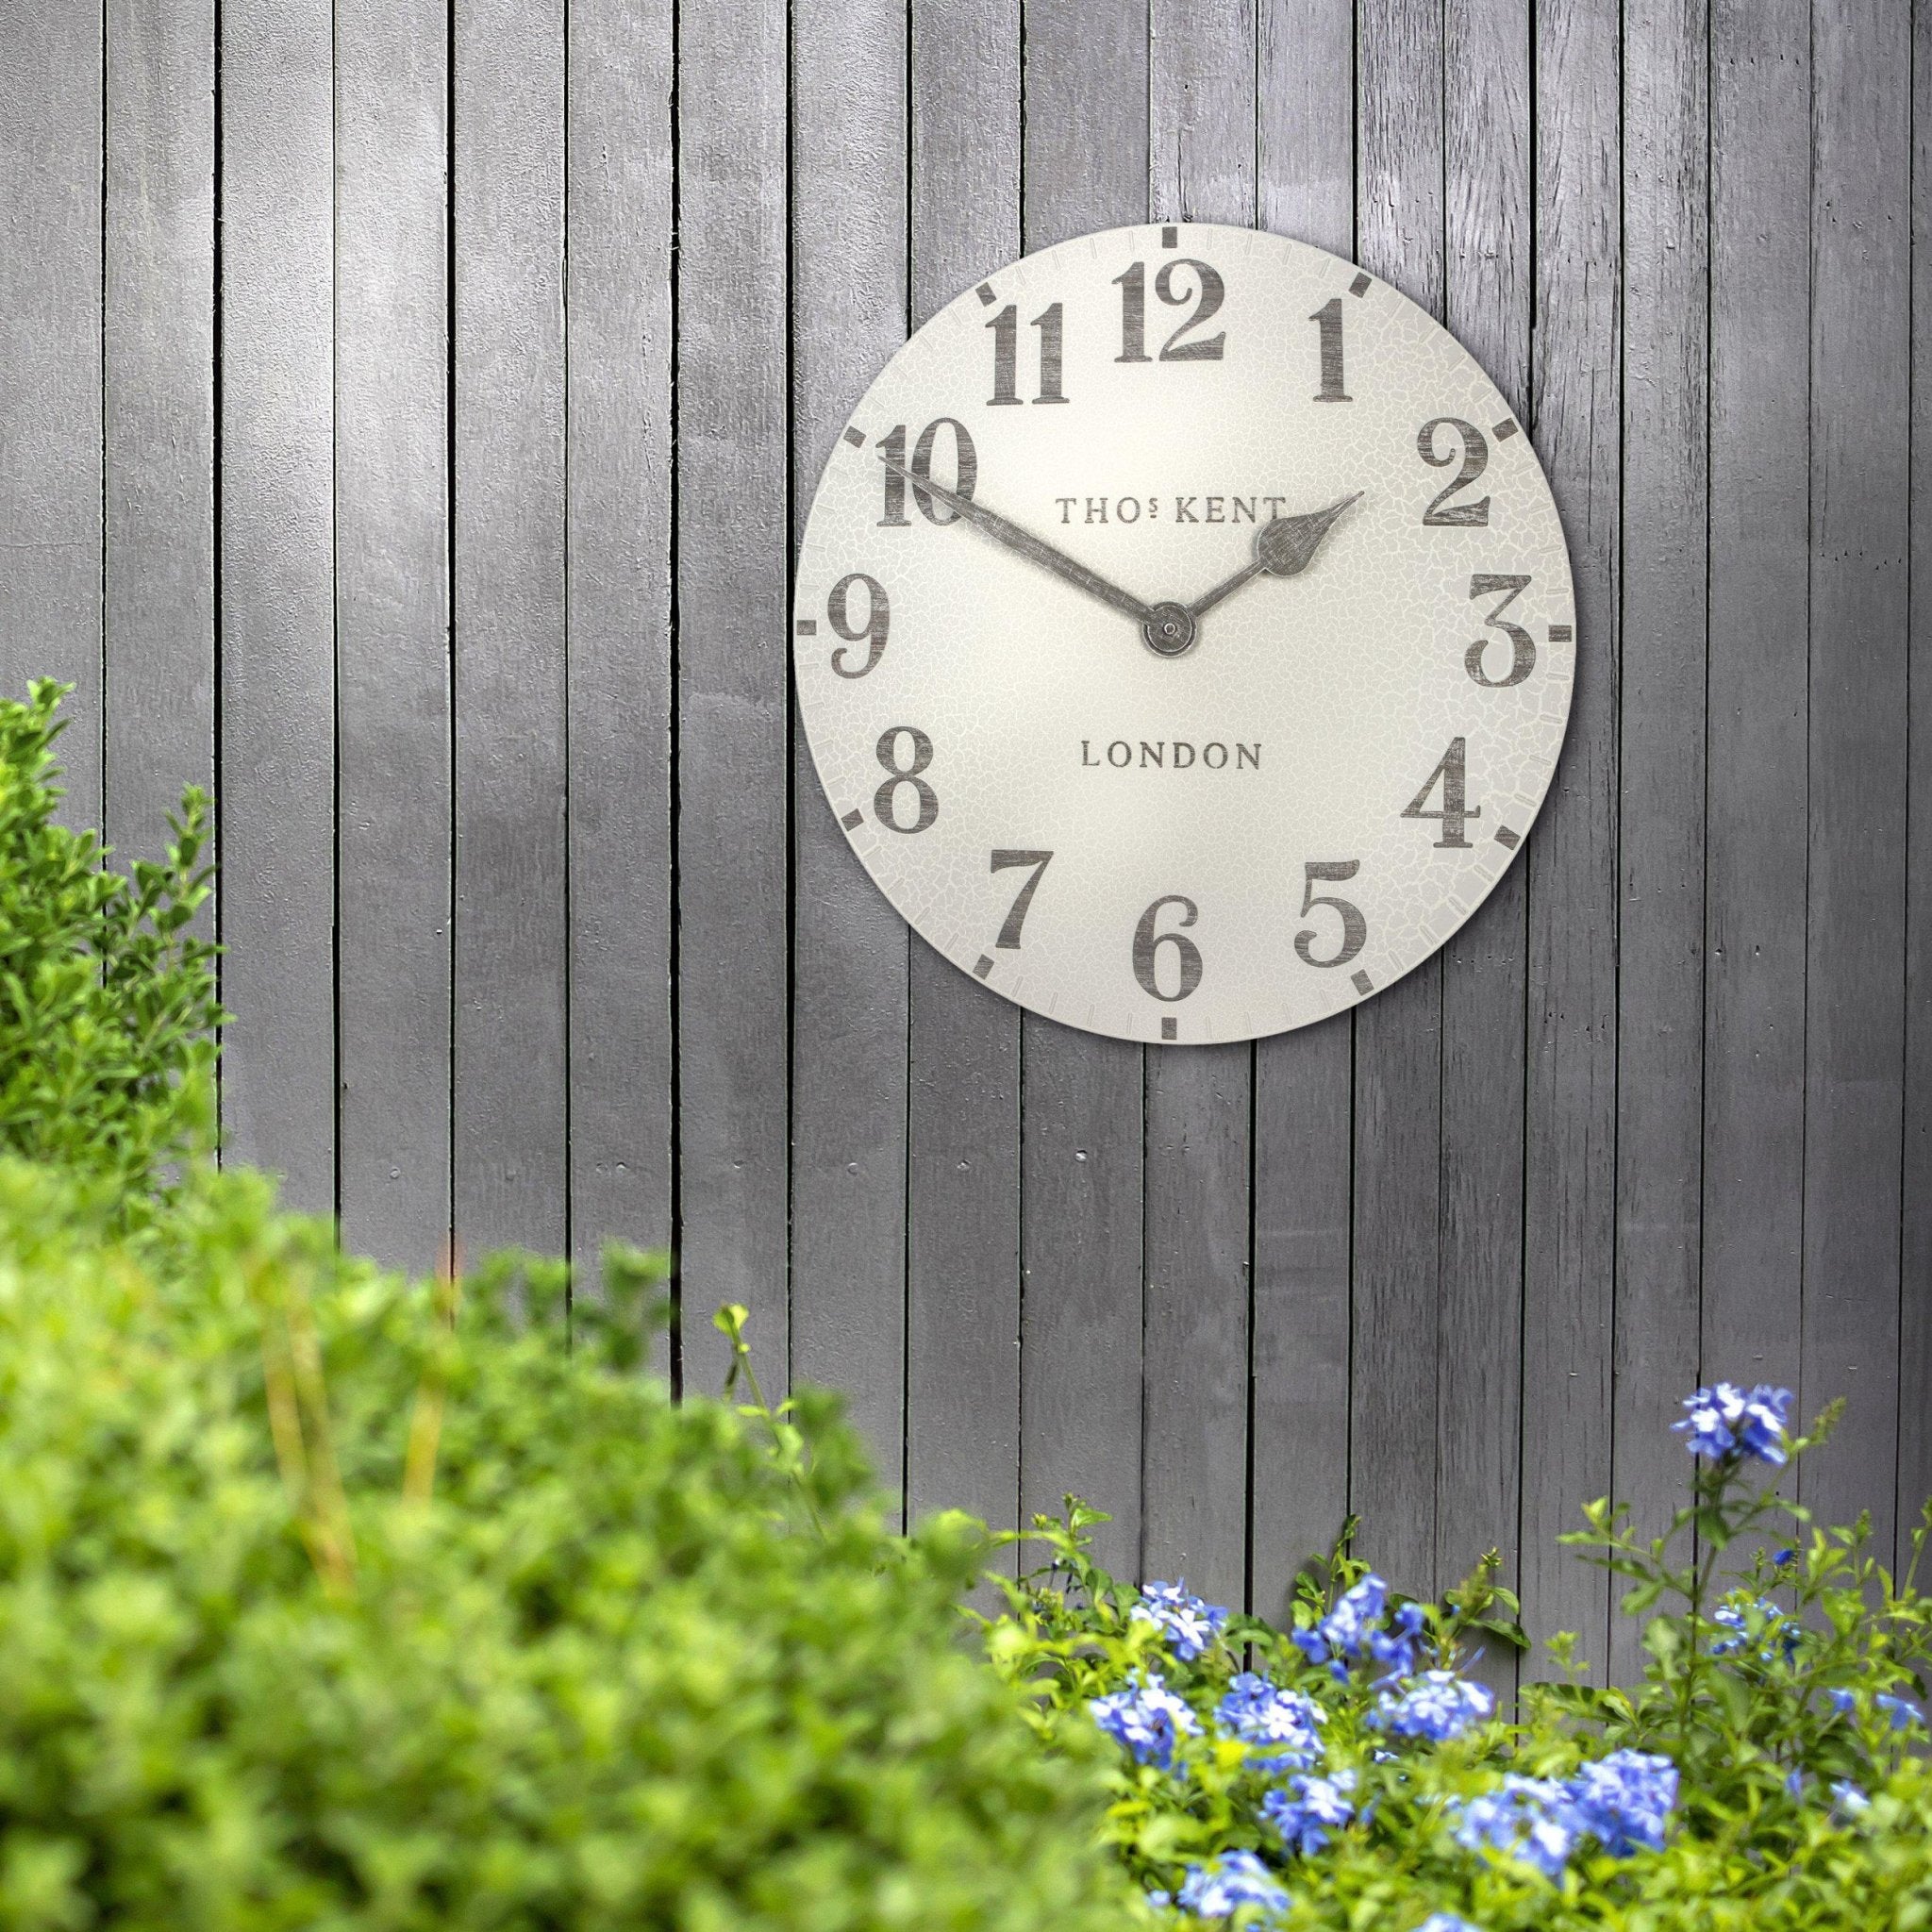 Thomas Kent Arabic Crackle Outdoor Wall Clock (50cm/20") - Duck Barn Interiors